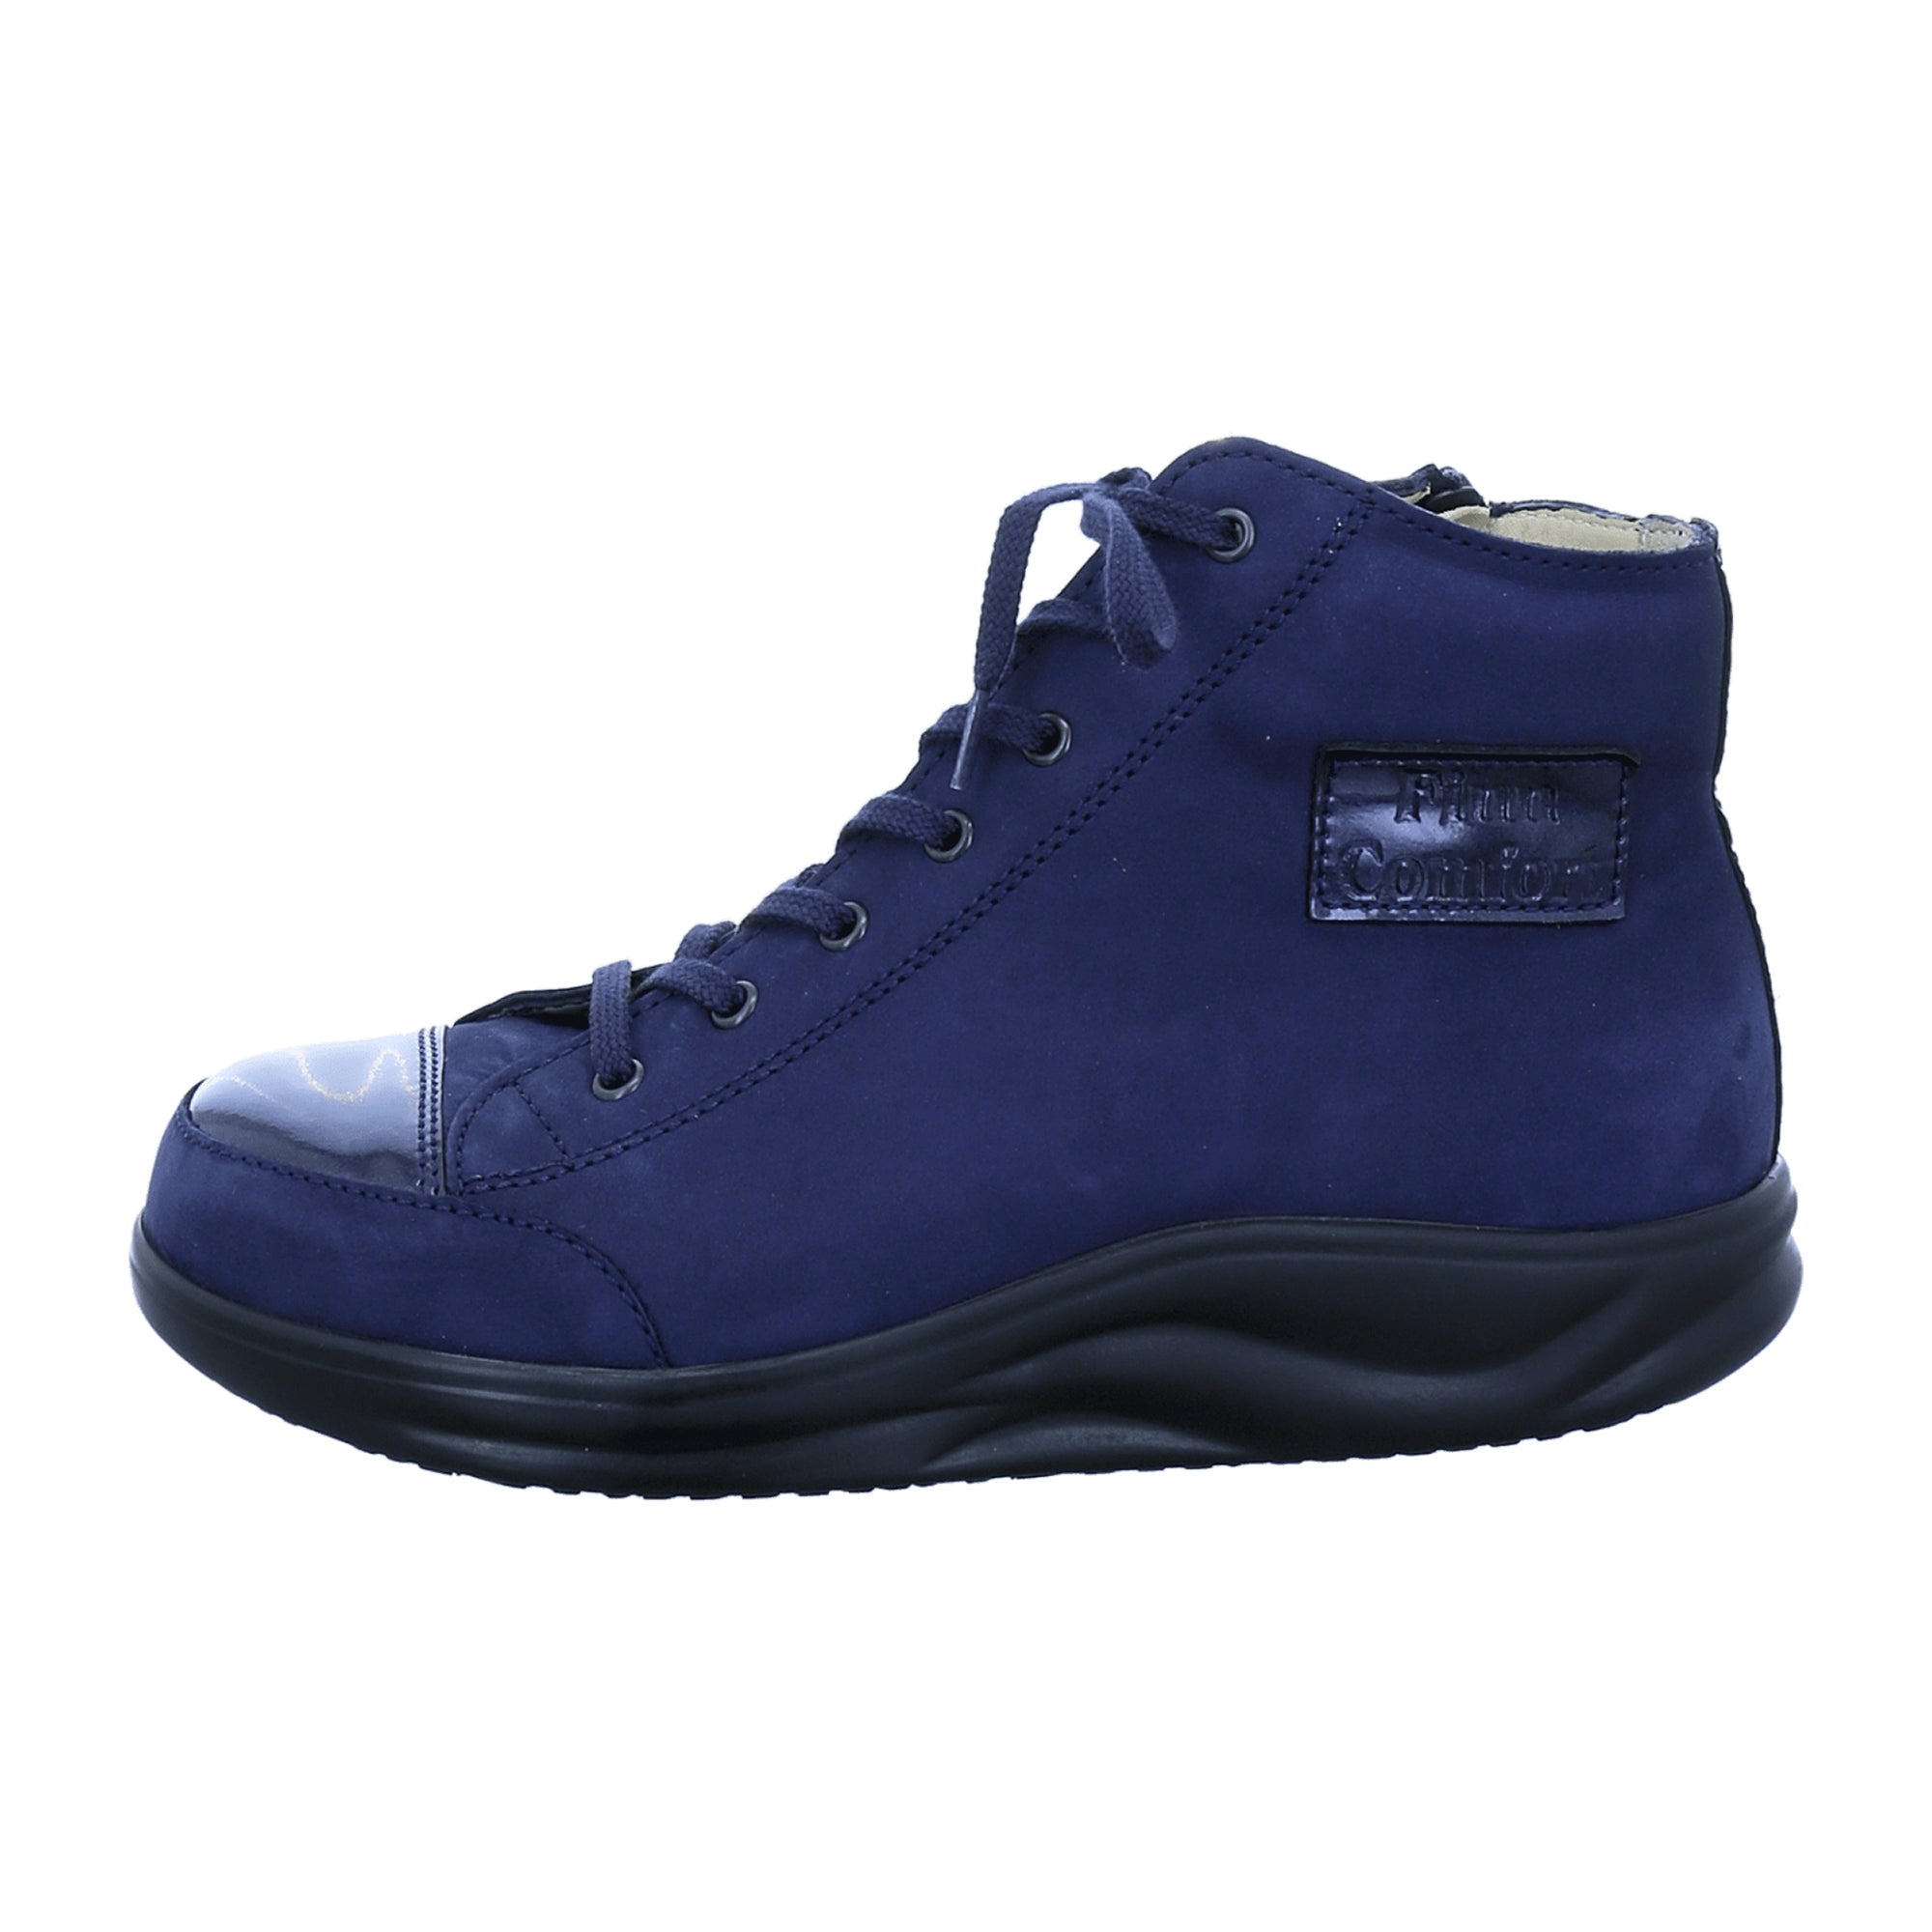 Finn Comfort Holten Women's Comfortable Sneakers, Stylish Blue